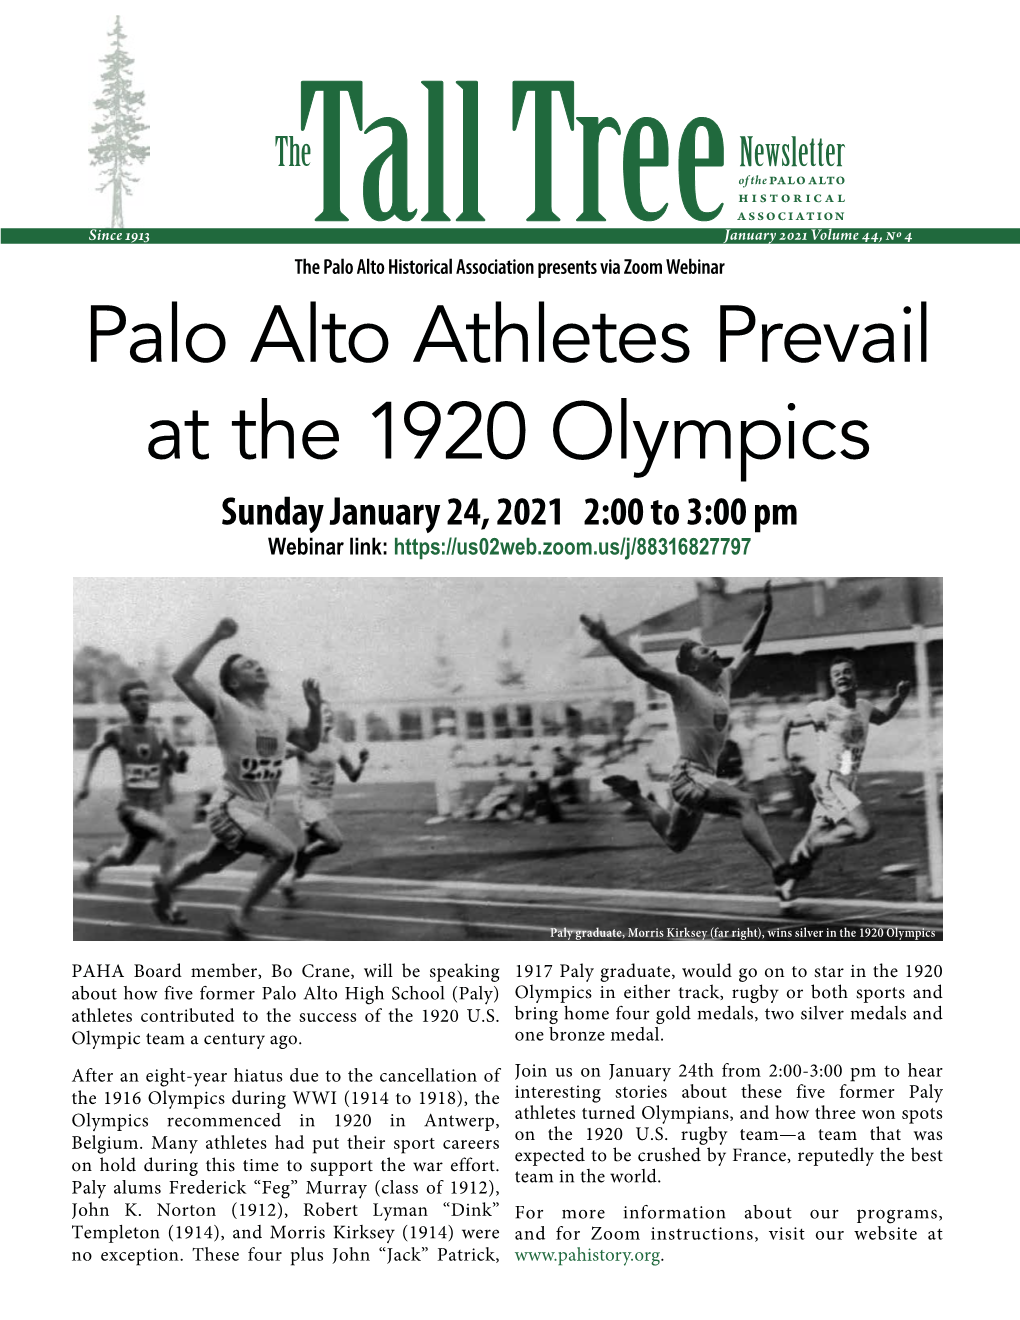 Palo Alto Athletes Prevail at the 1920 Olympics Sunday January 24, 2021 2:00 to 3:00 Pm Webinar Link